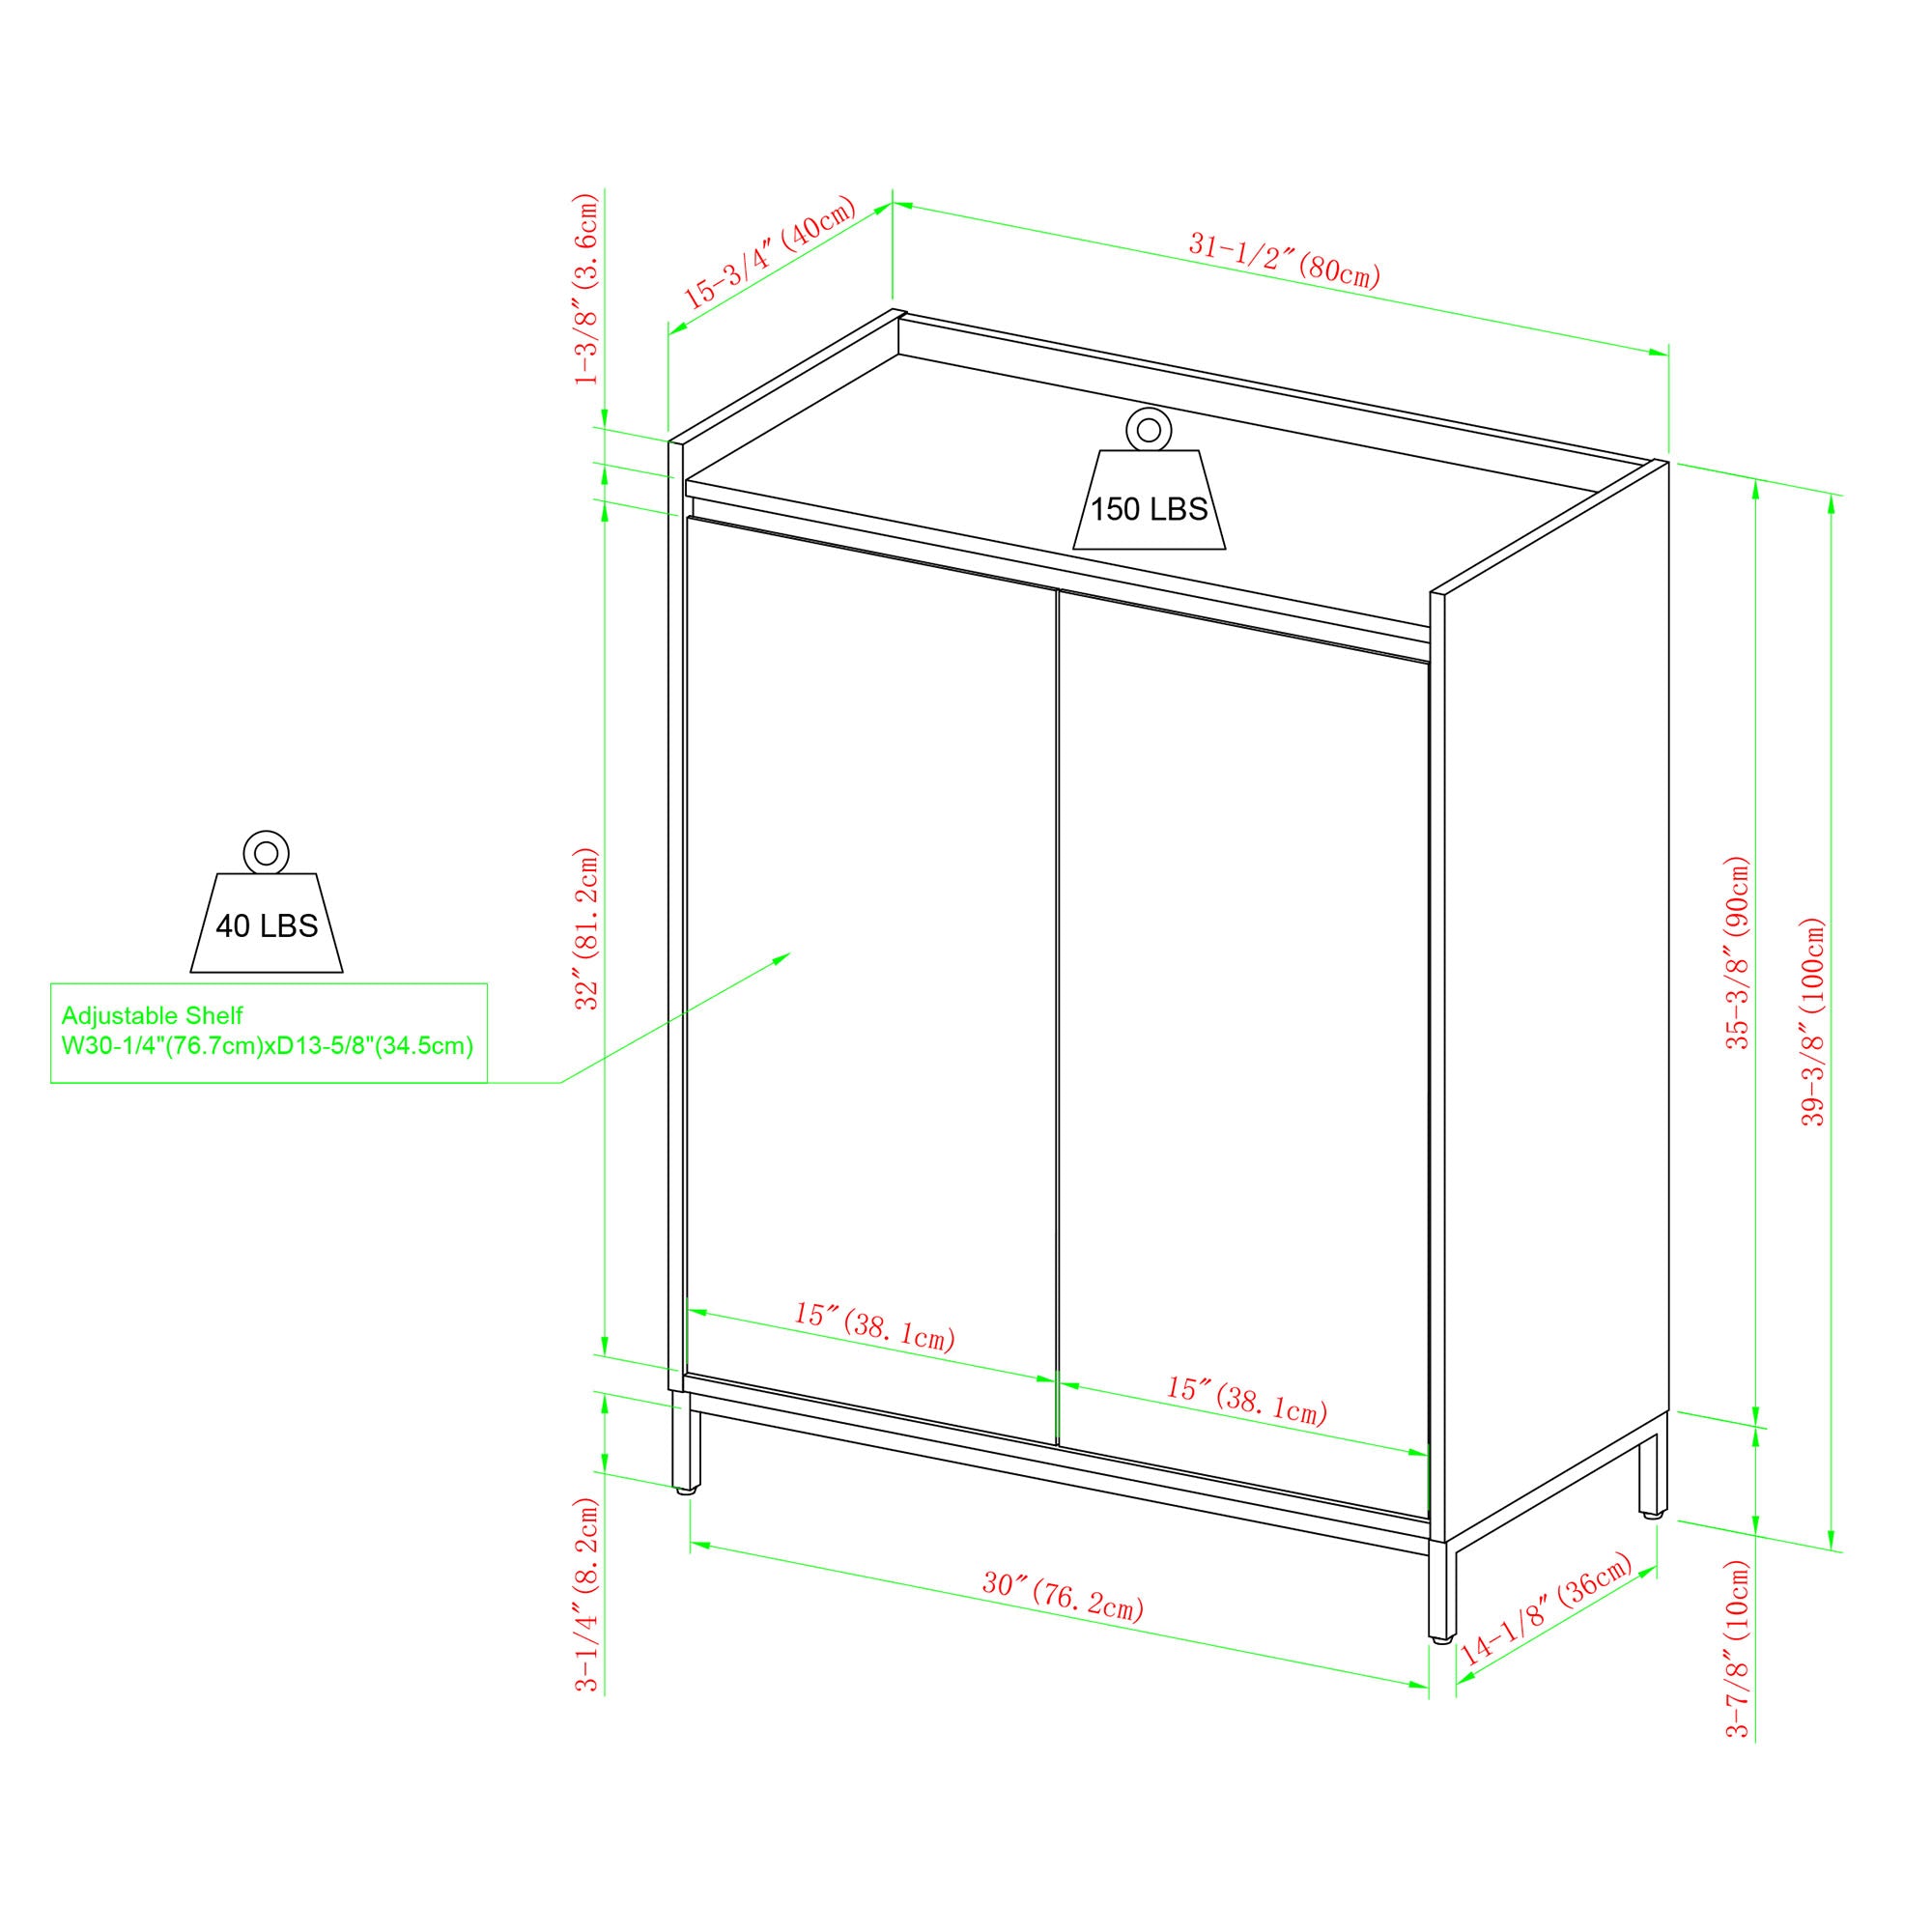 Luminesce Minimalist 2-Door Accent Cabinet - Cabinets